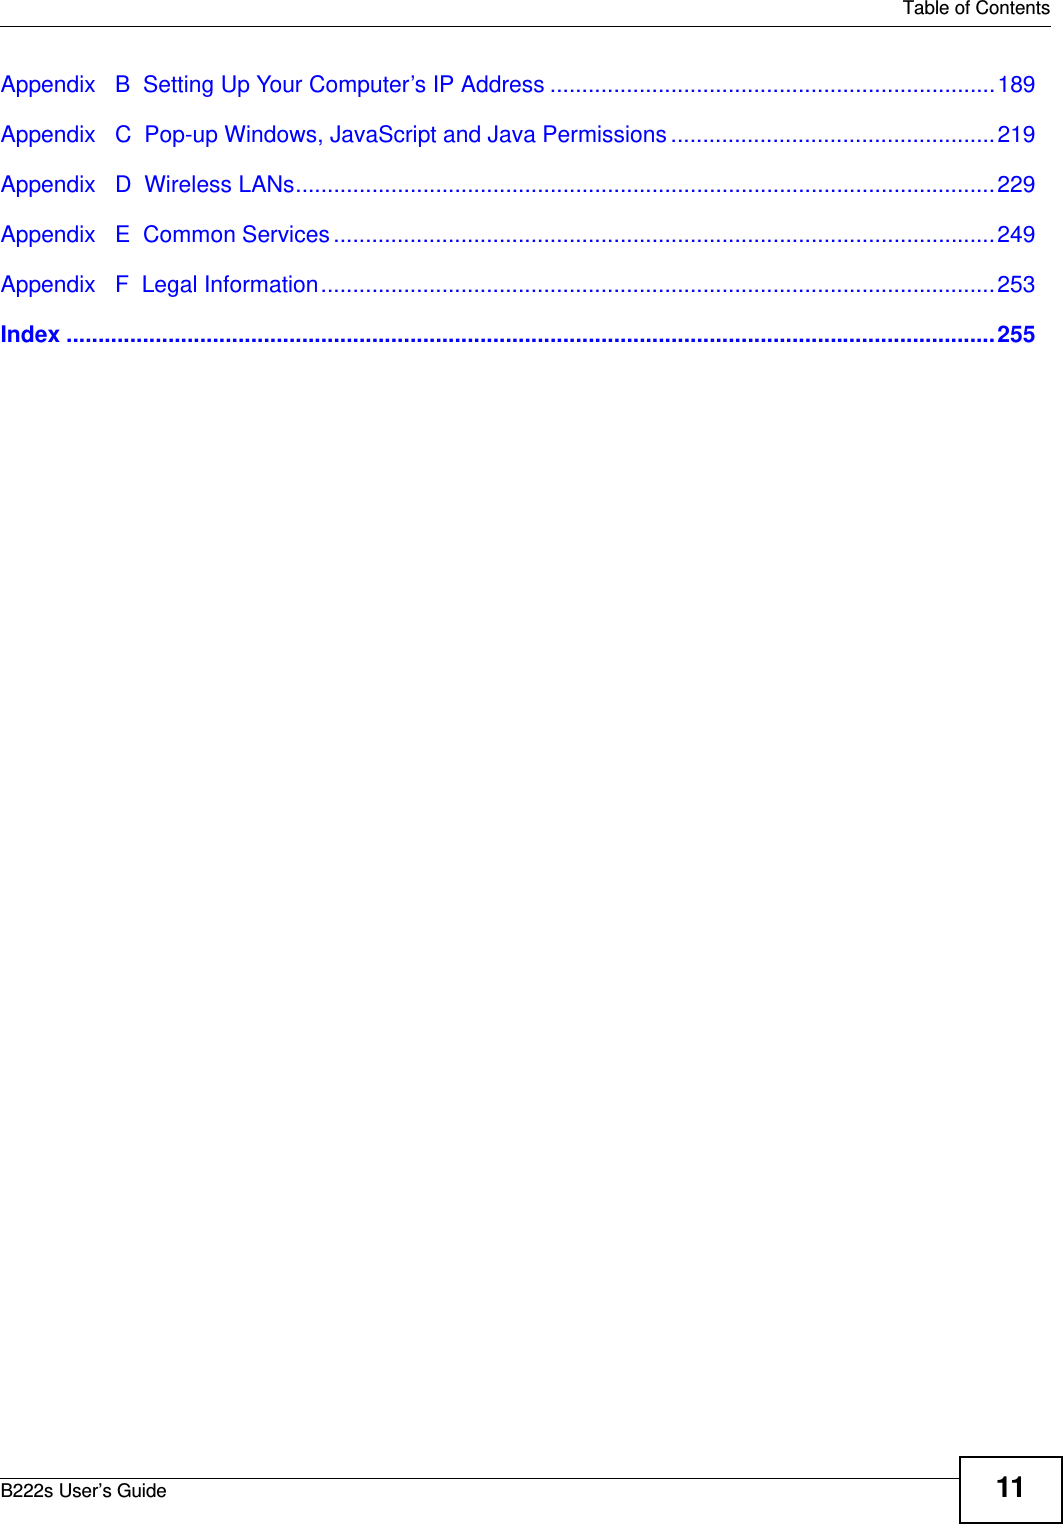   Table of ContentsB222s User’s Guide 11Appendix   B  Setting Up Your Computer’s IP Address ......................................................................189Appendix   C  Pop-up Windows, JavaScript and Java Permissions ...................................................219Appendix   D  Wireless LANs..............................................................................................................229Appendix   E  Common Services ........................................................................................................249Appendix   F  Legal Information..........................................................................................................253Index ..................................................................................................................................................255